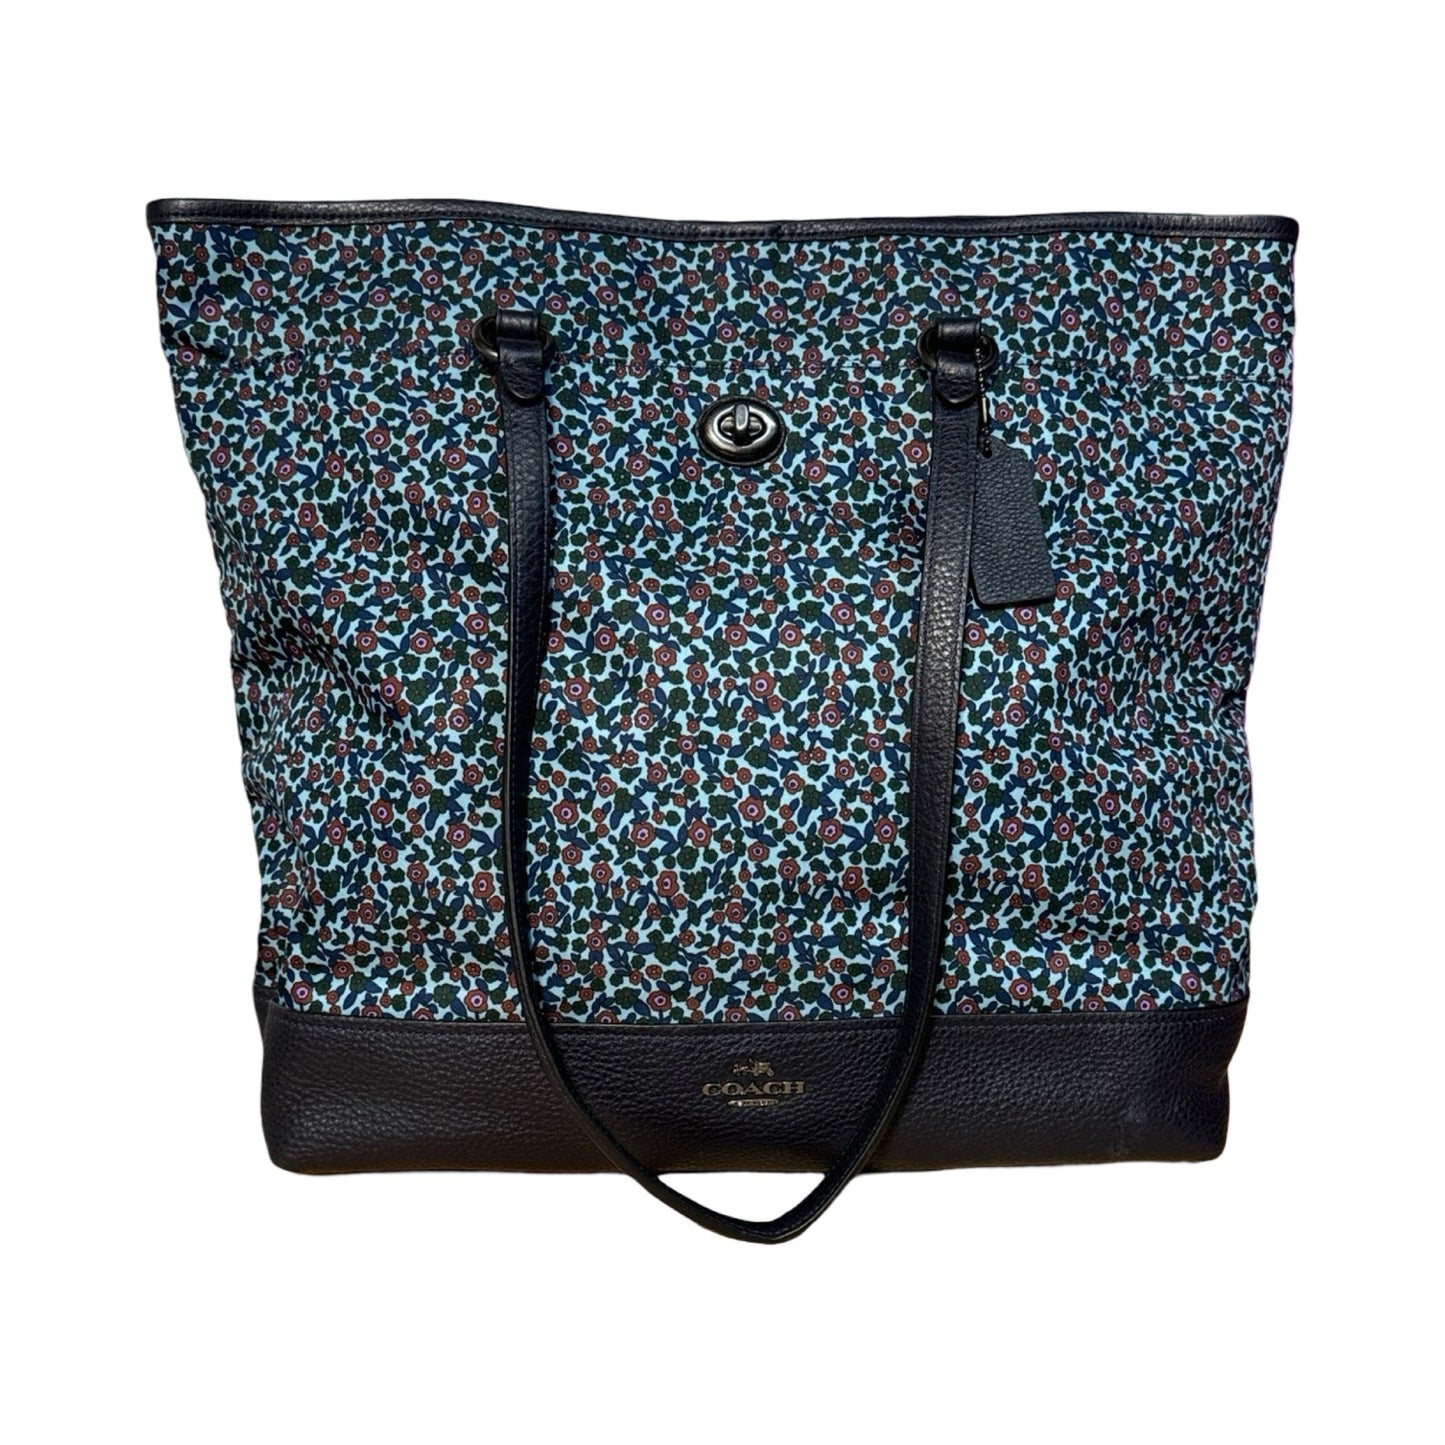 NWT Blue & Black Multicolored Handbag Coach, Size Large